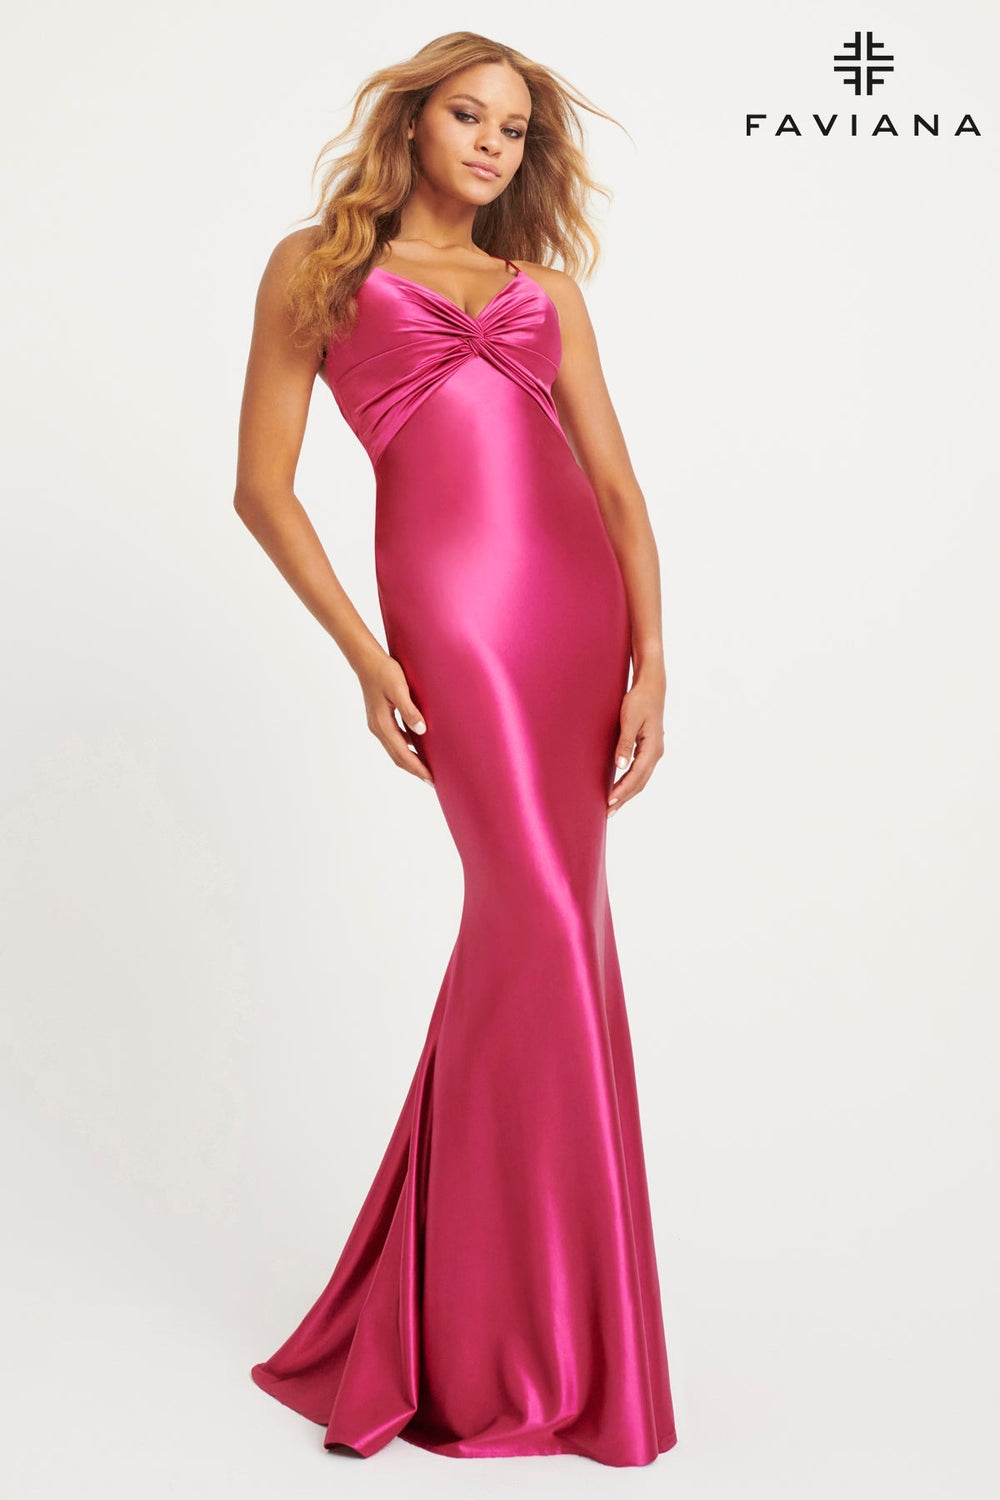 Faviana Prom Dress Faviana 11034 Dress